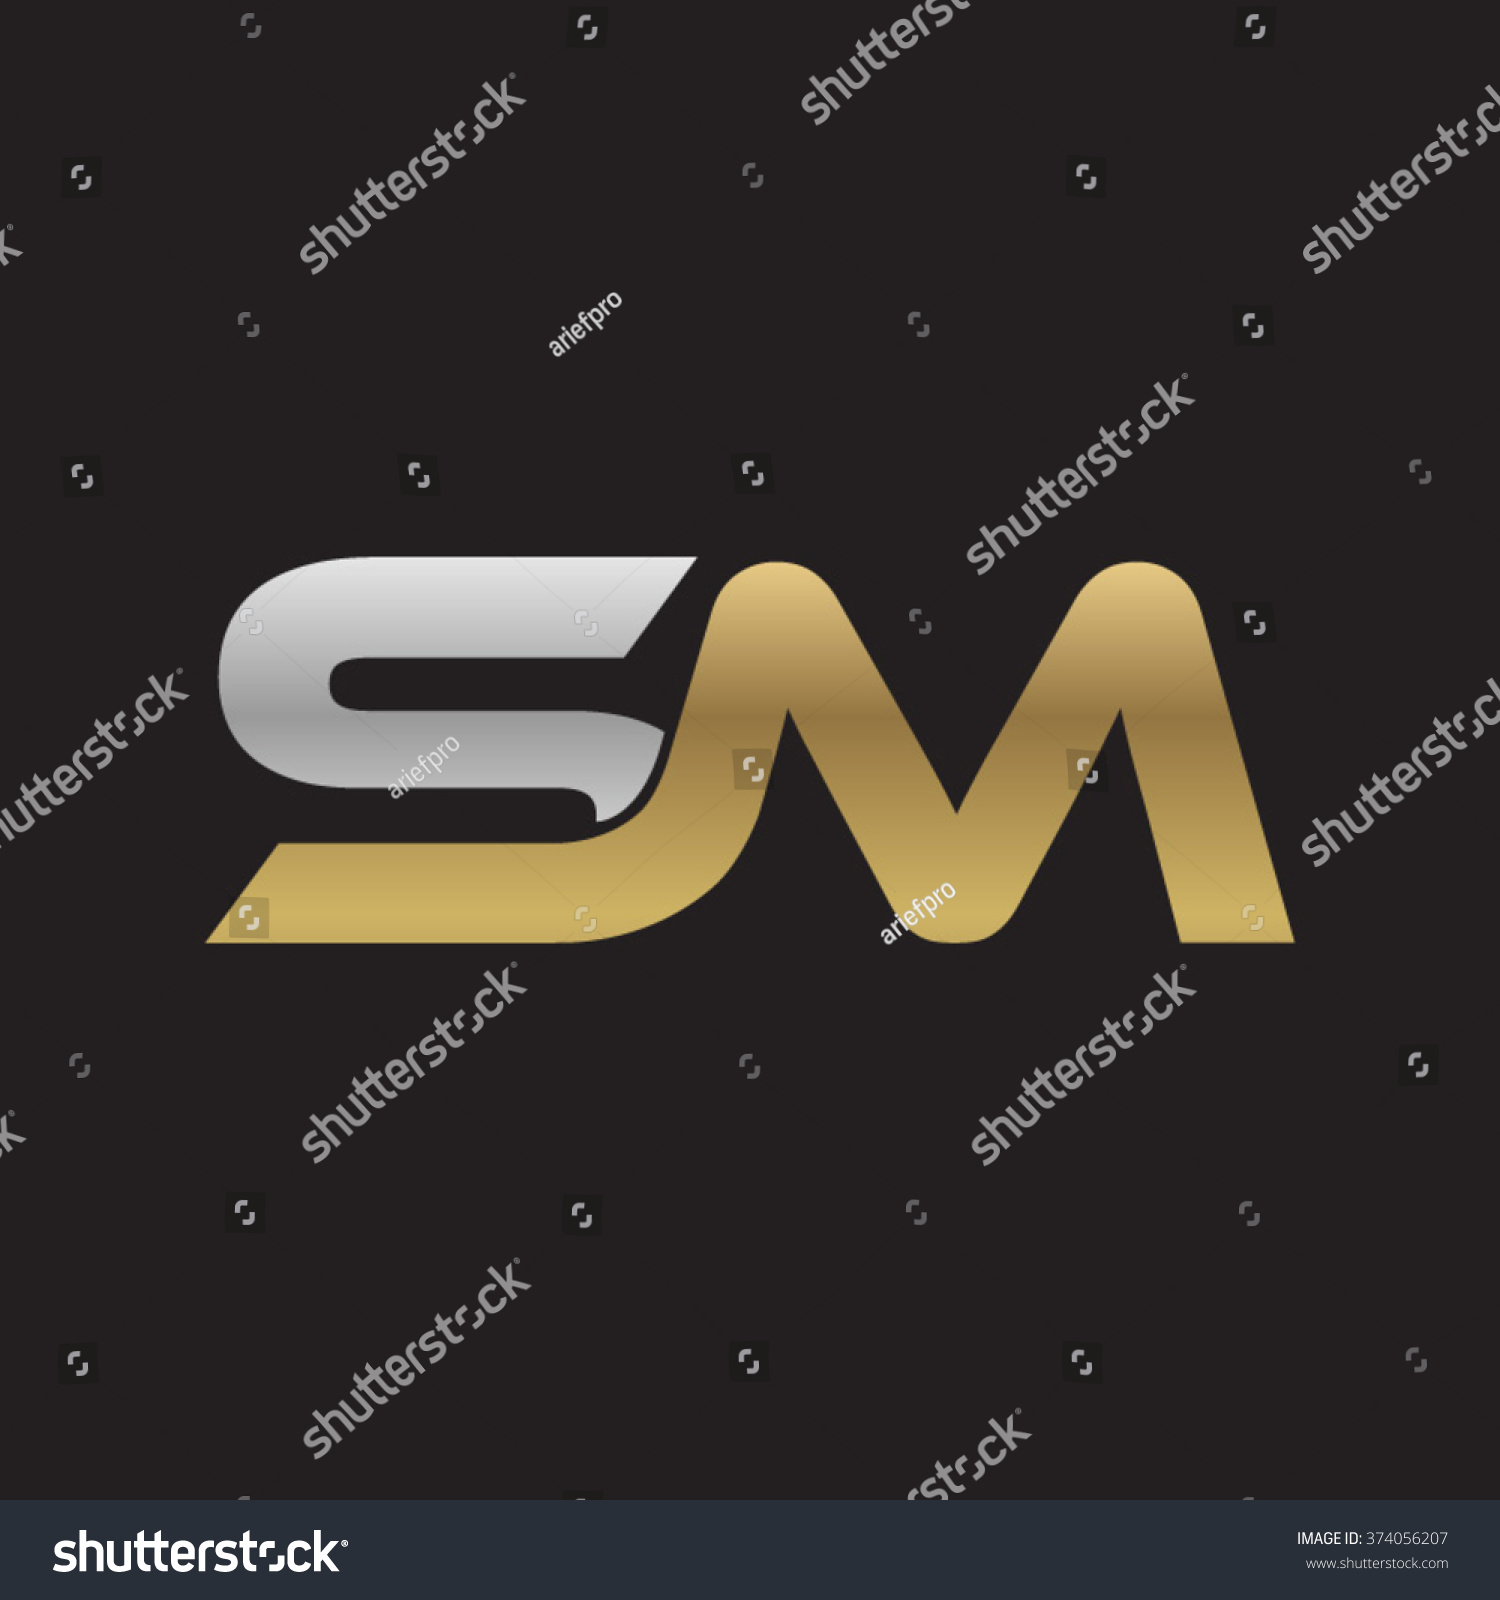 Sm Company Linked Letter Logo Golden Silver Black Background Stock ...